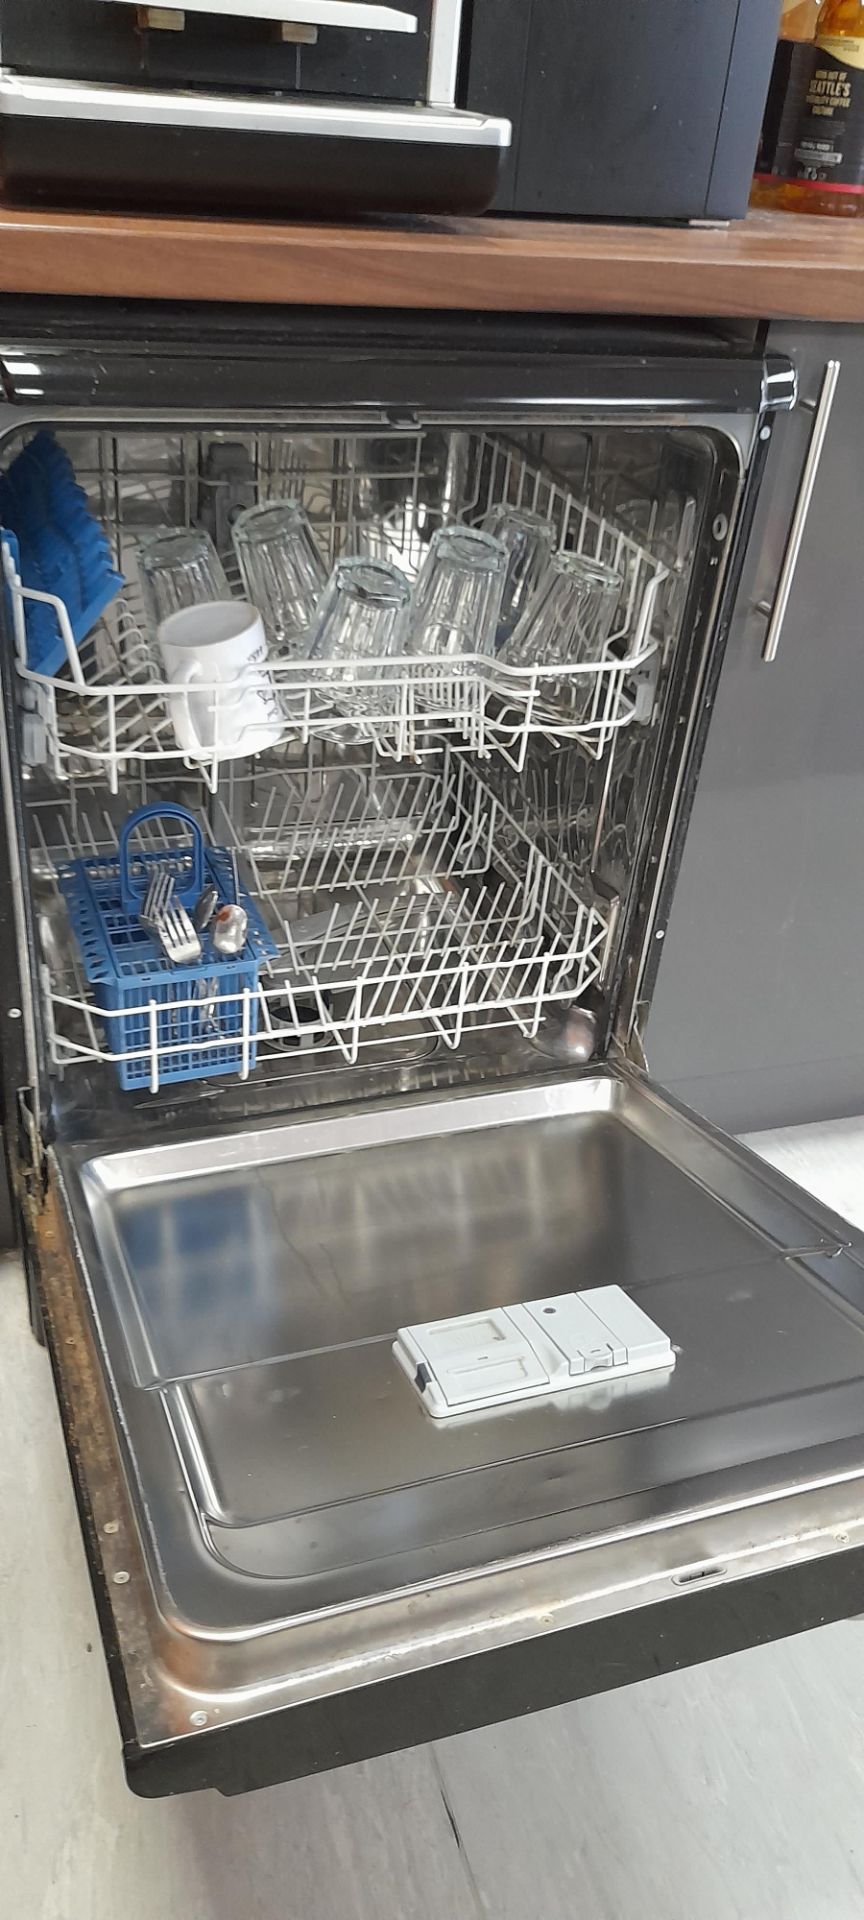 Indesit DFG 15BI Kuh Dishwasher – Not working possibly blown fuse - Image 2 of 2